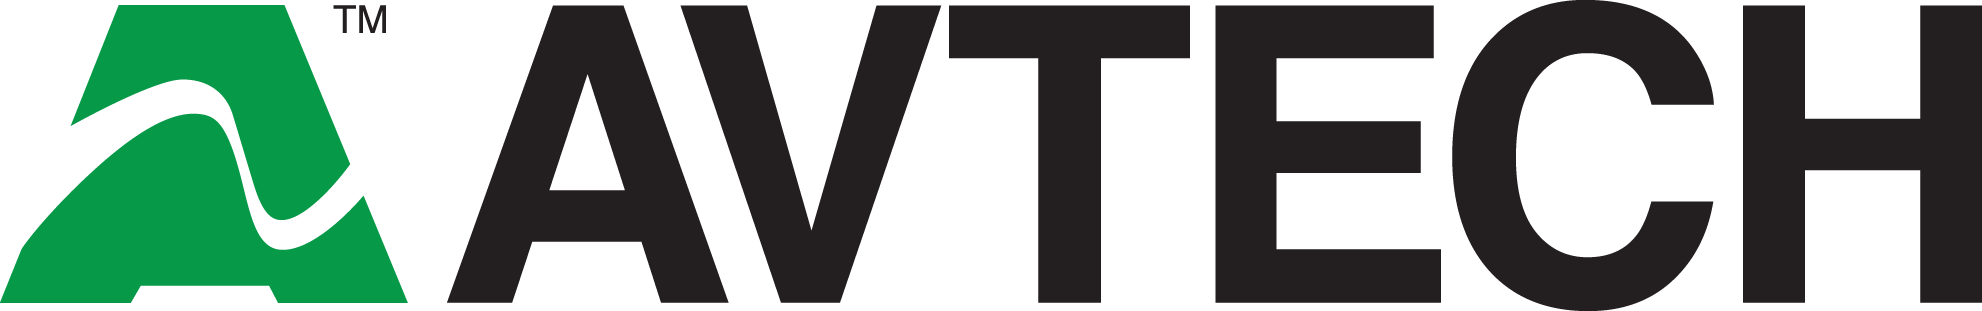 Avtech logo